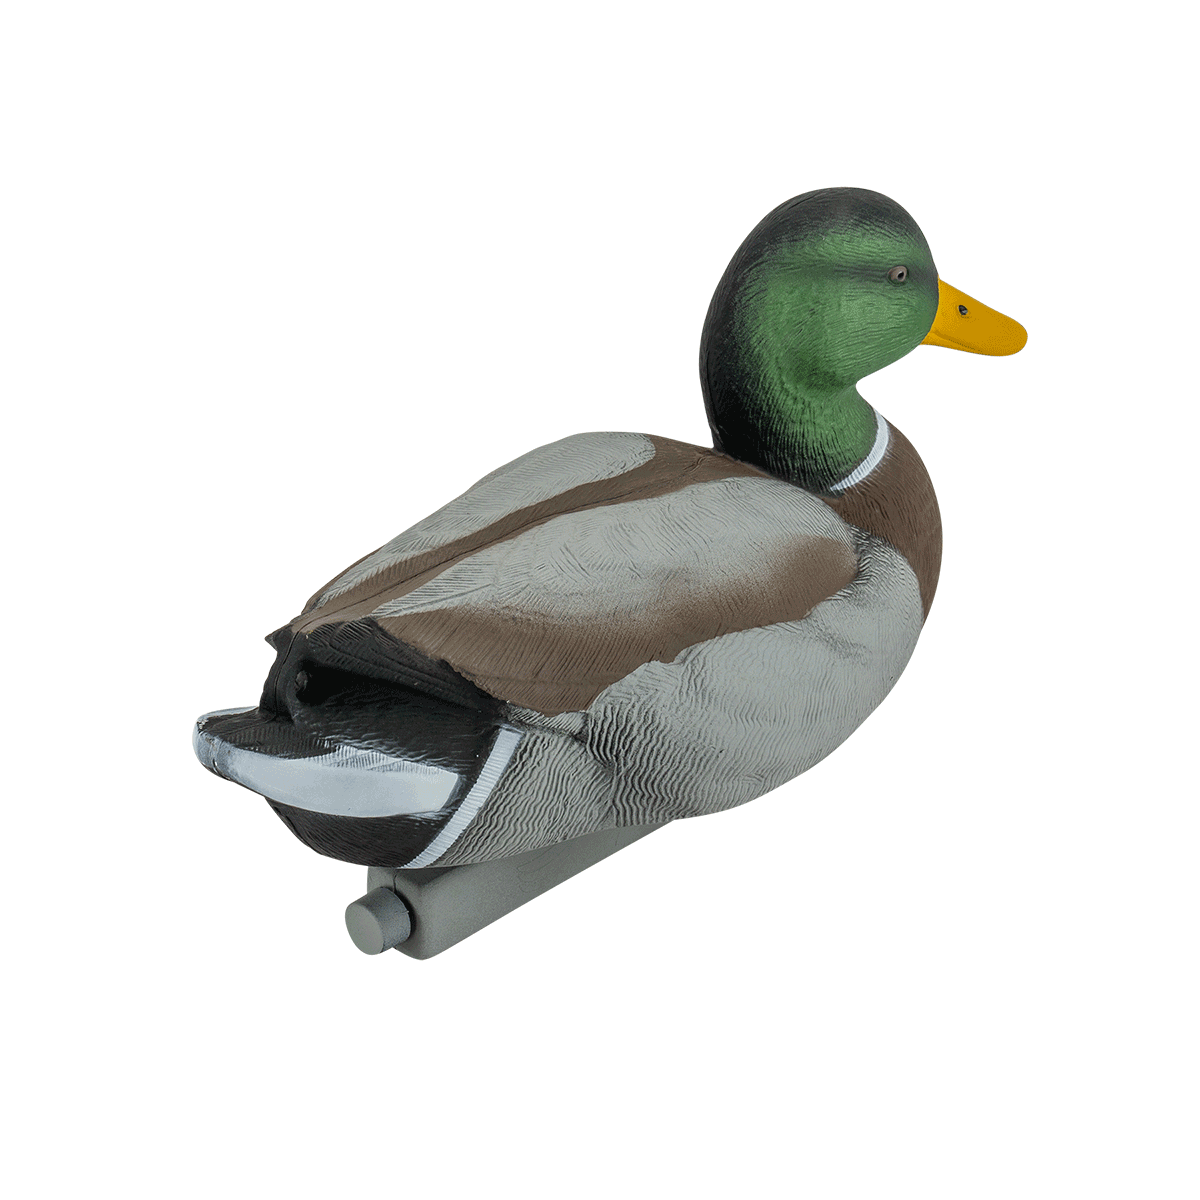 Mallard duck decoy rotating image